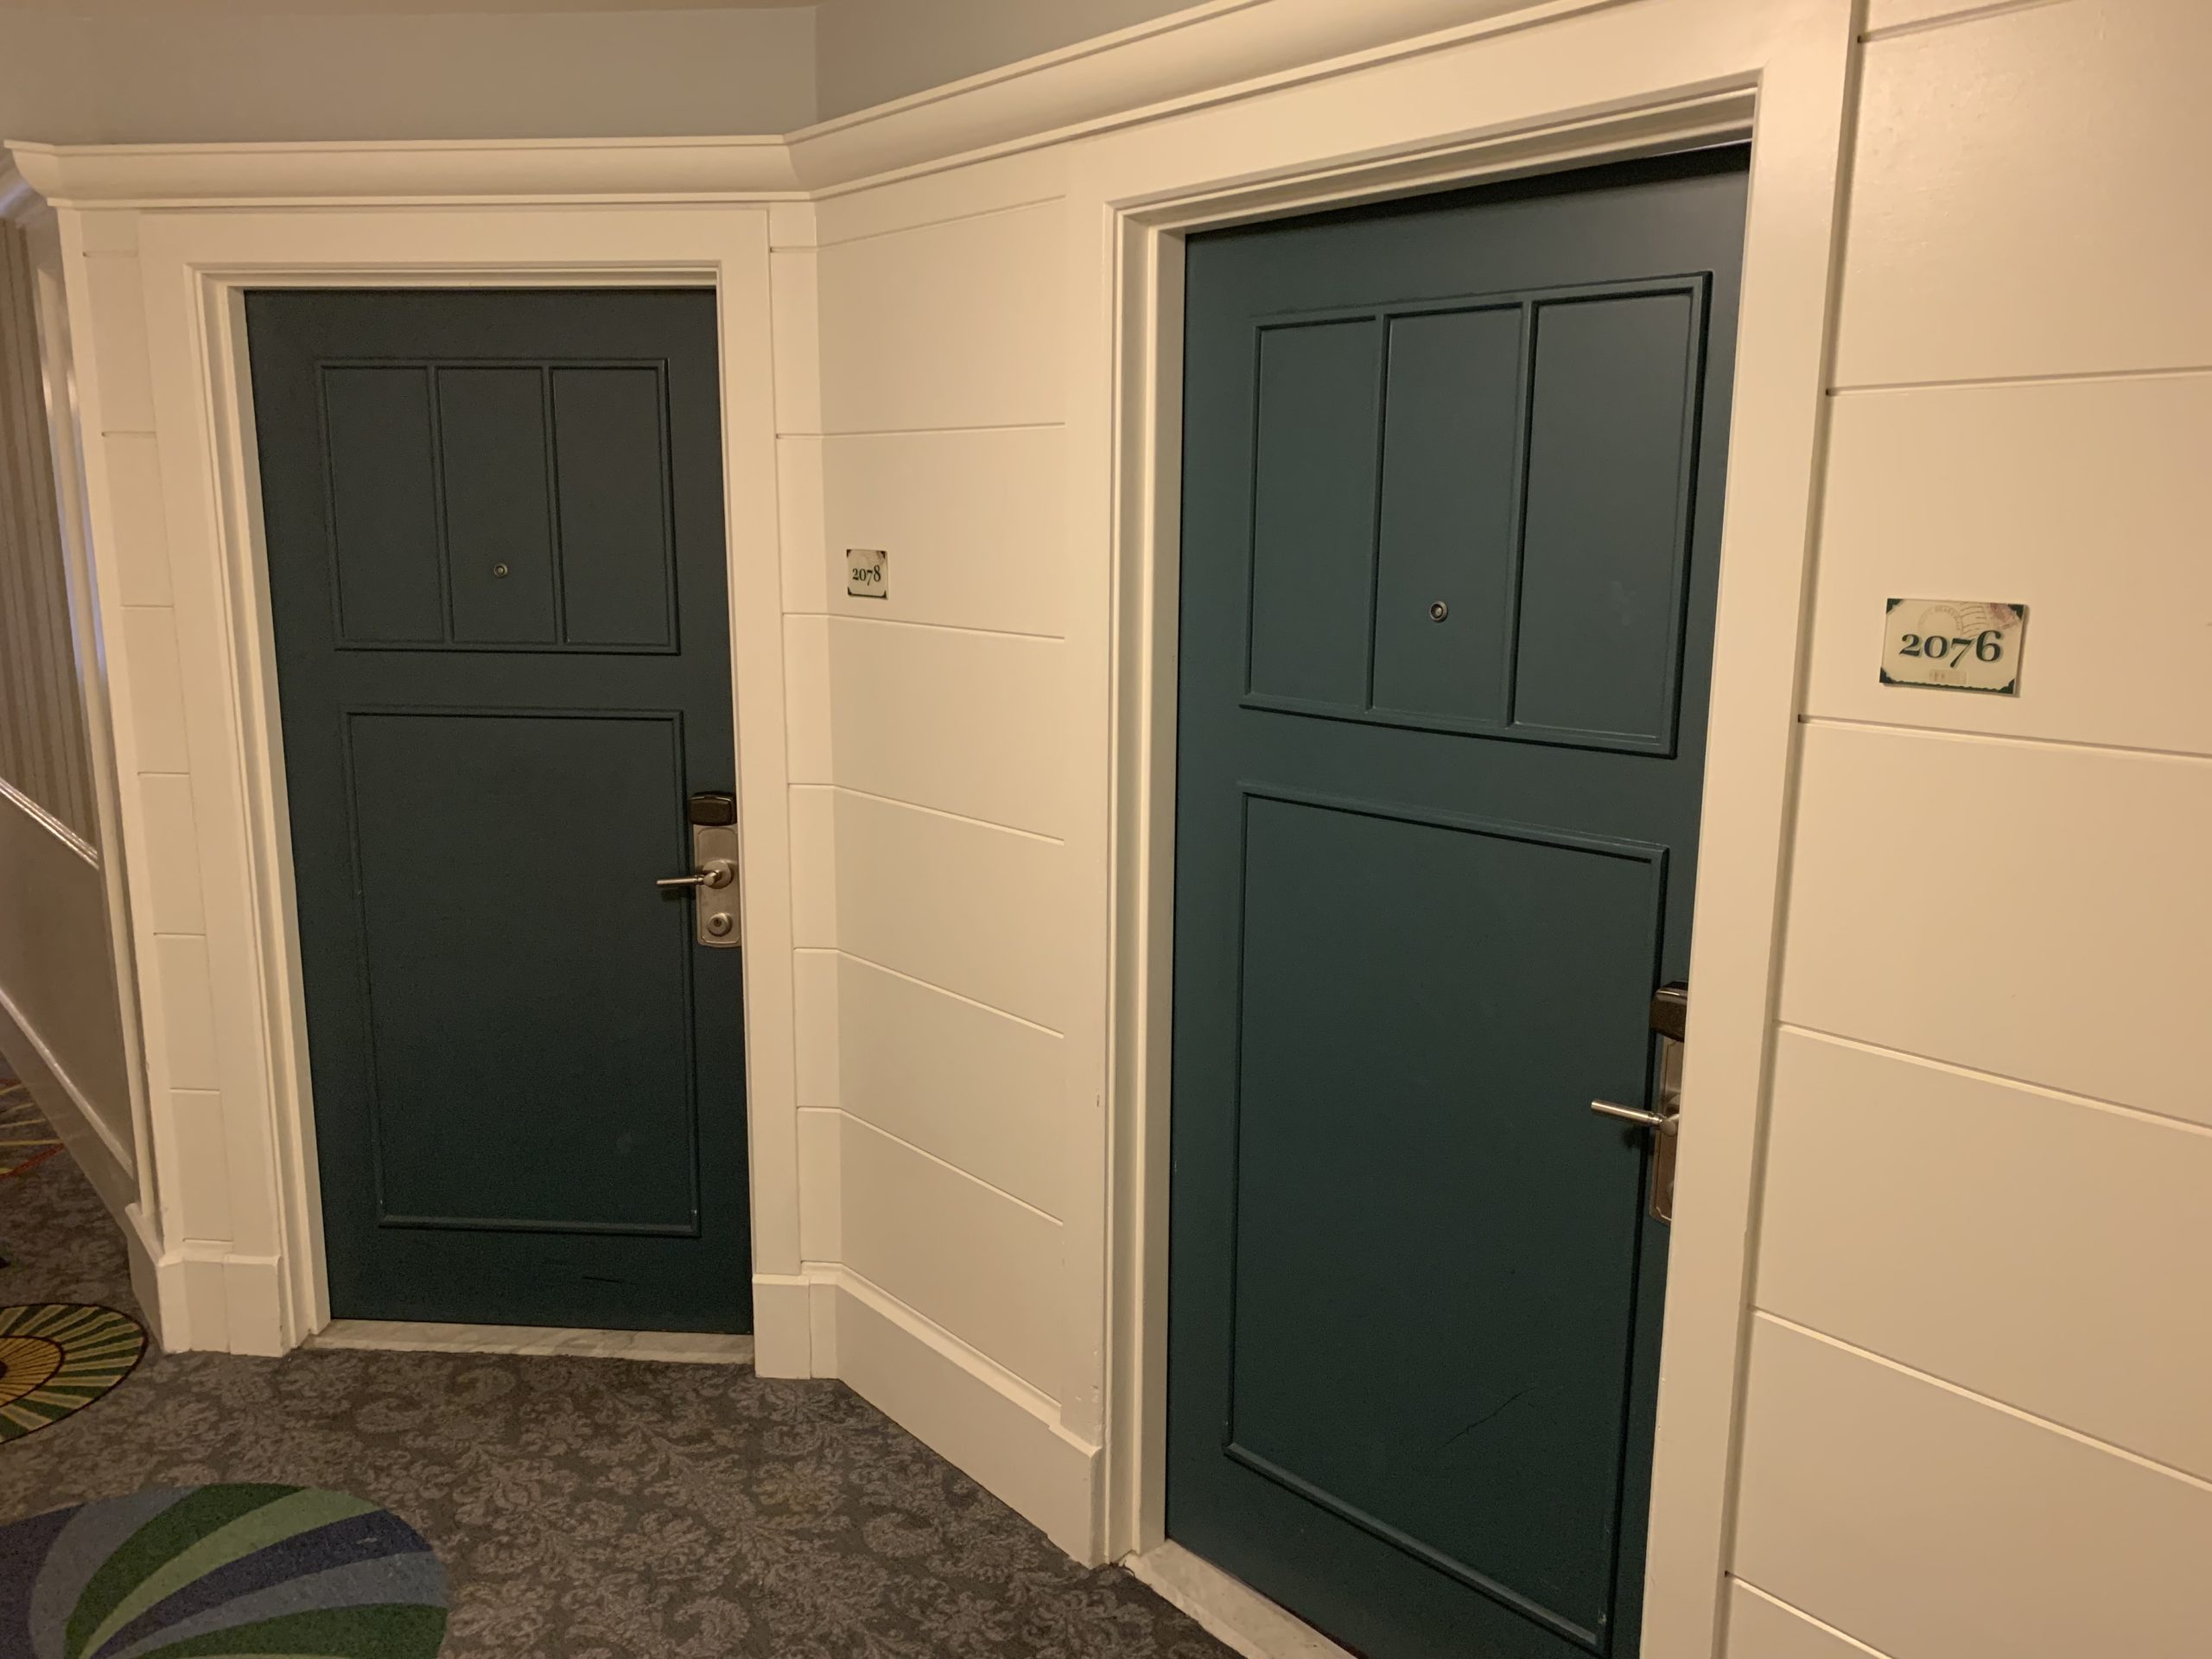 two doors in a room